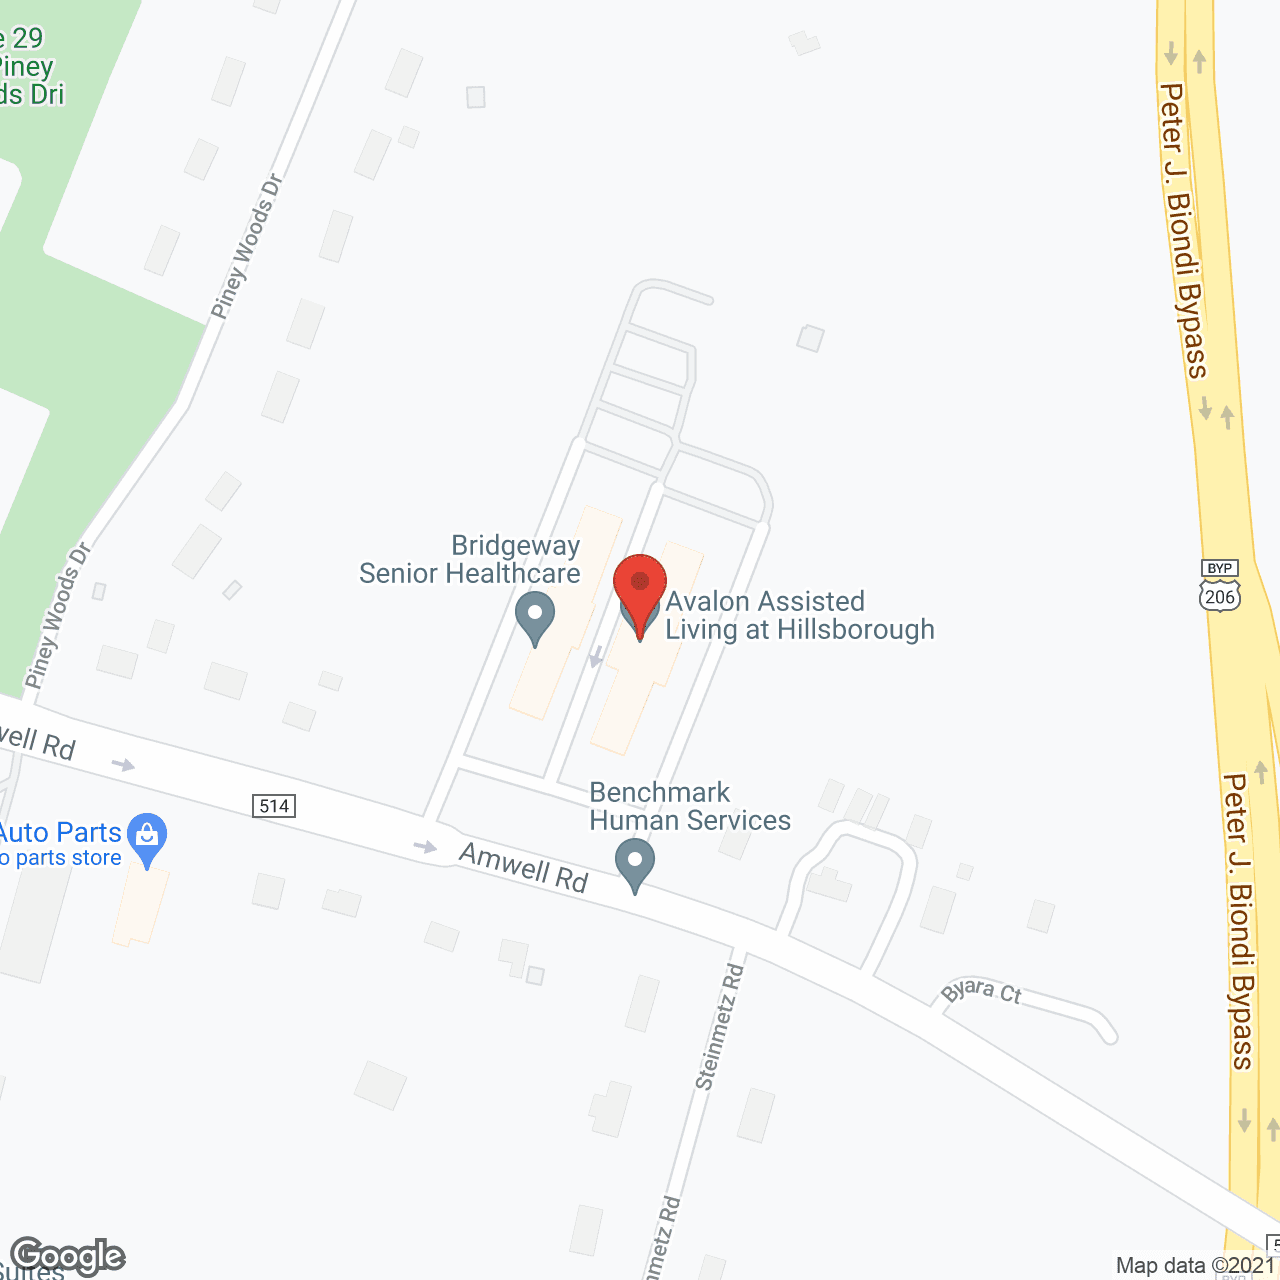 The Avalon at Hillsborough in google map